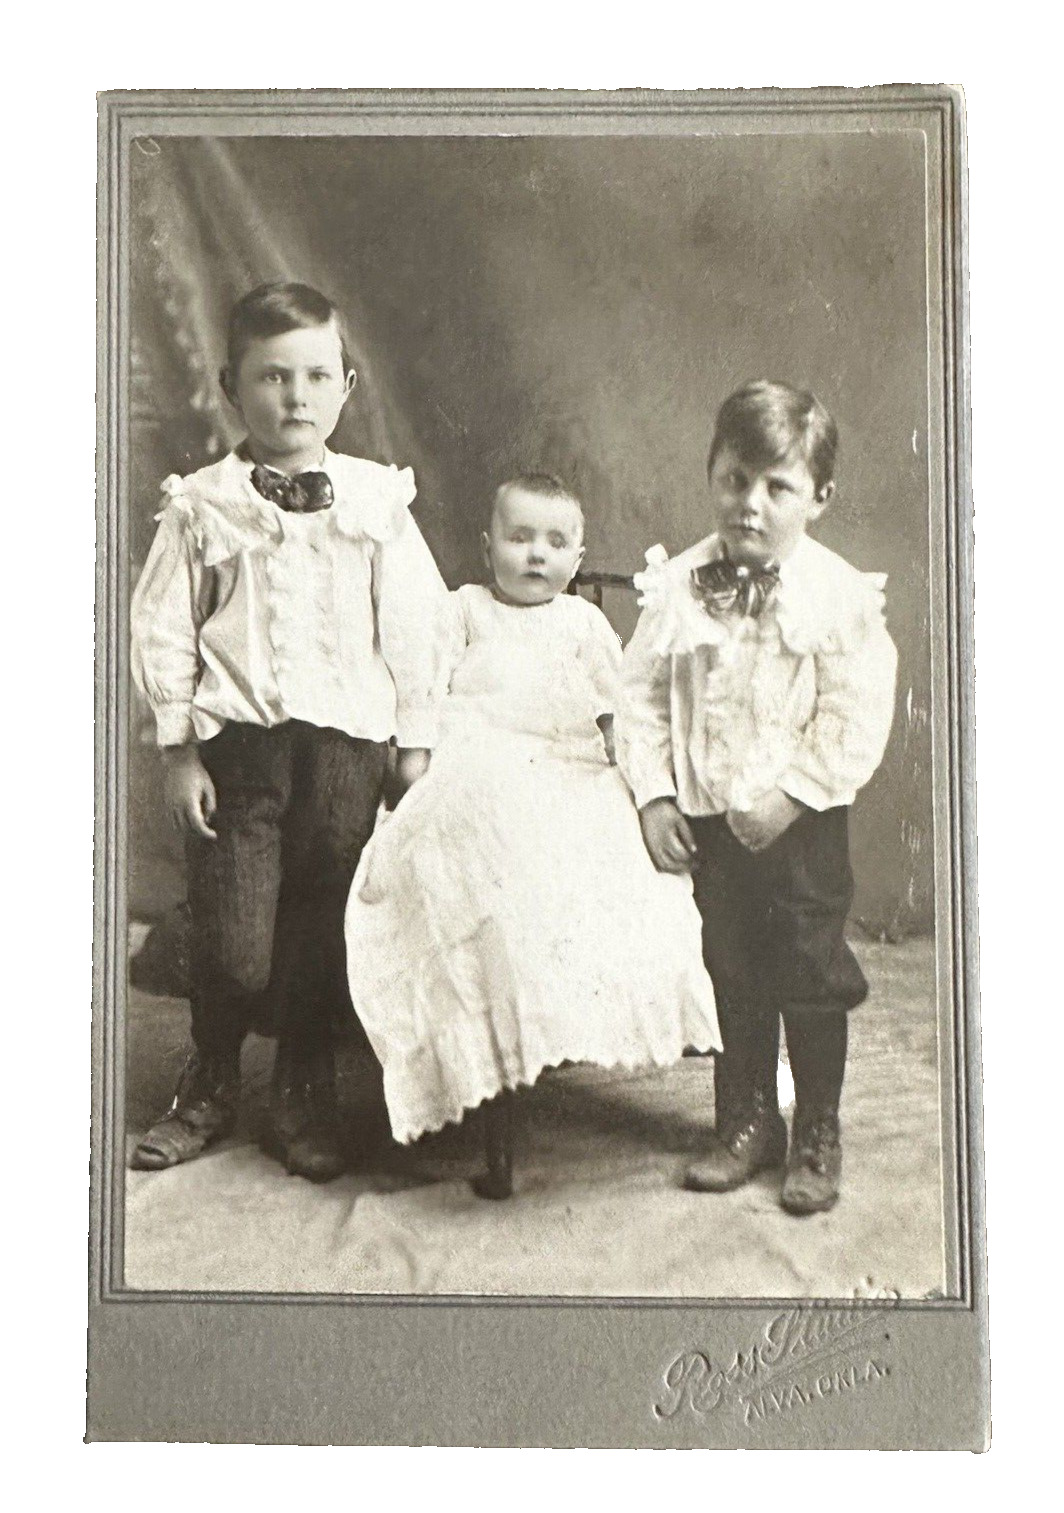 Antique Cabinet Card Photo Rosa Studios Alva OK Siblings Aging Spots Long Gown